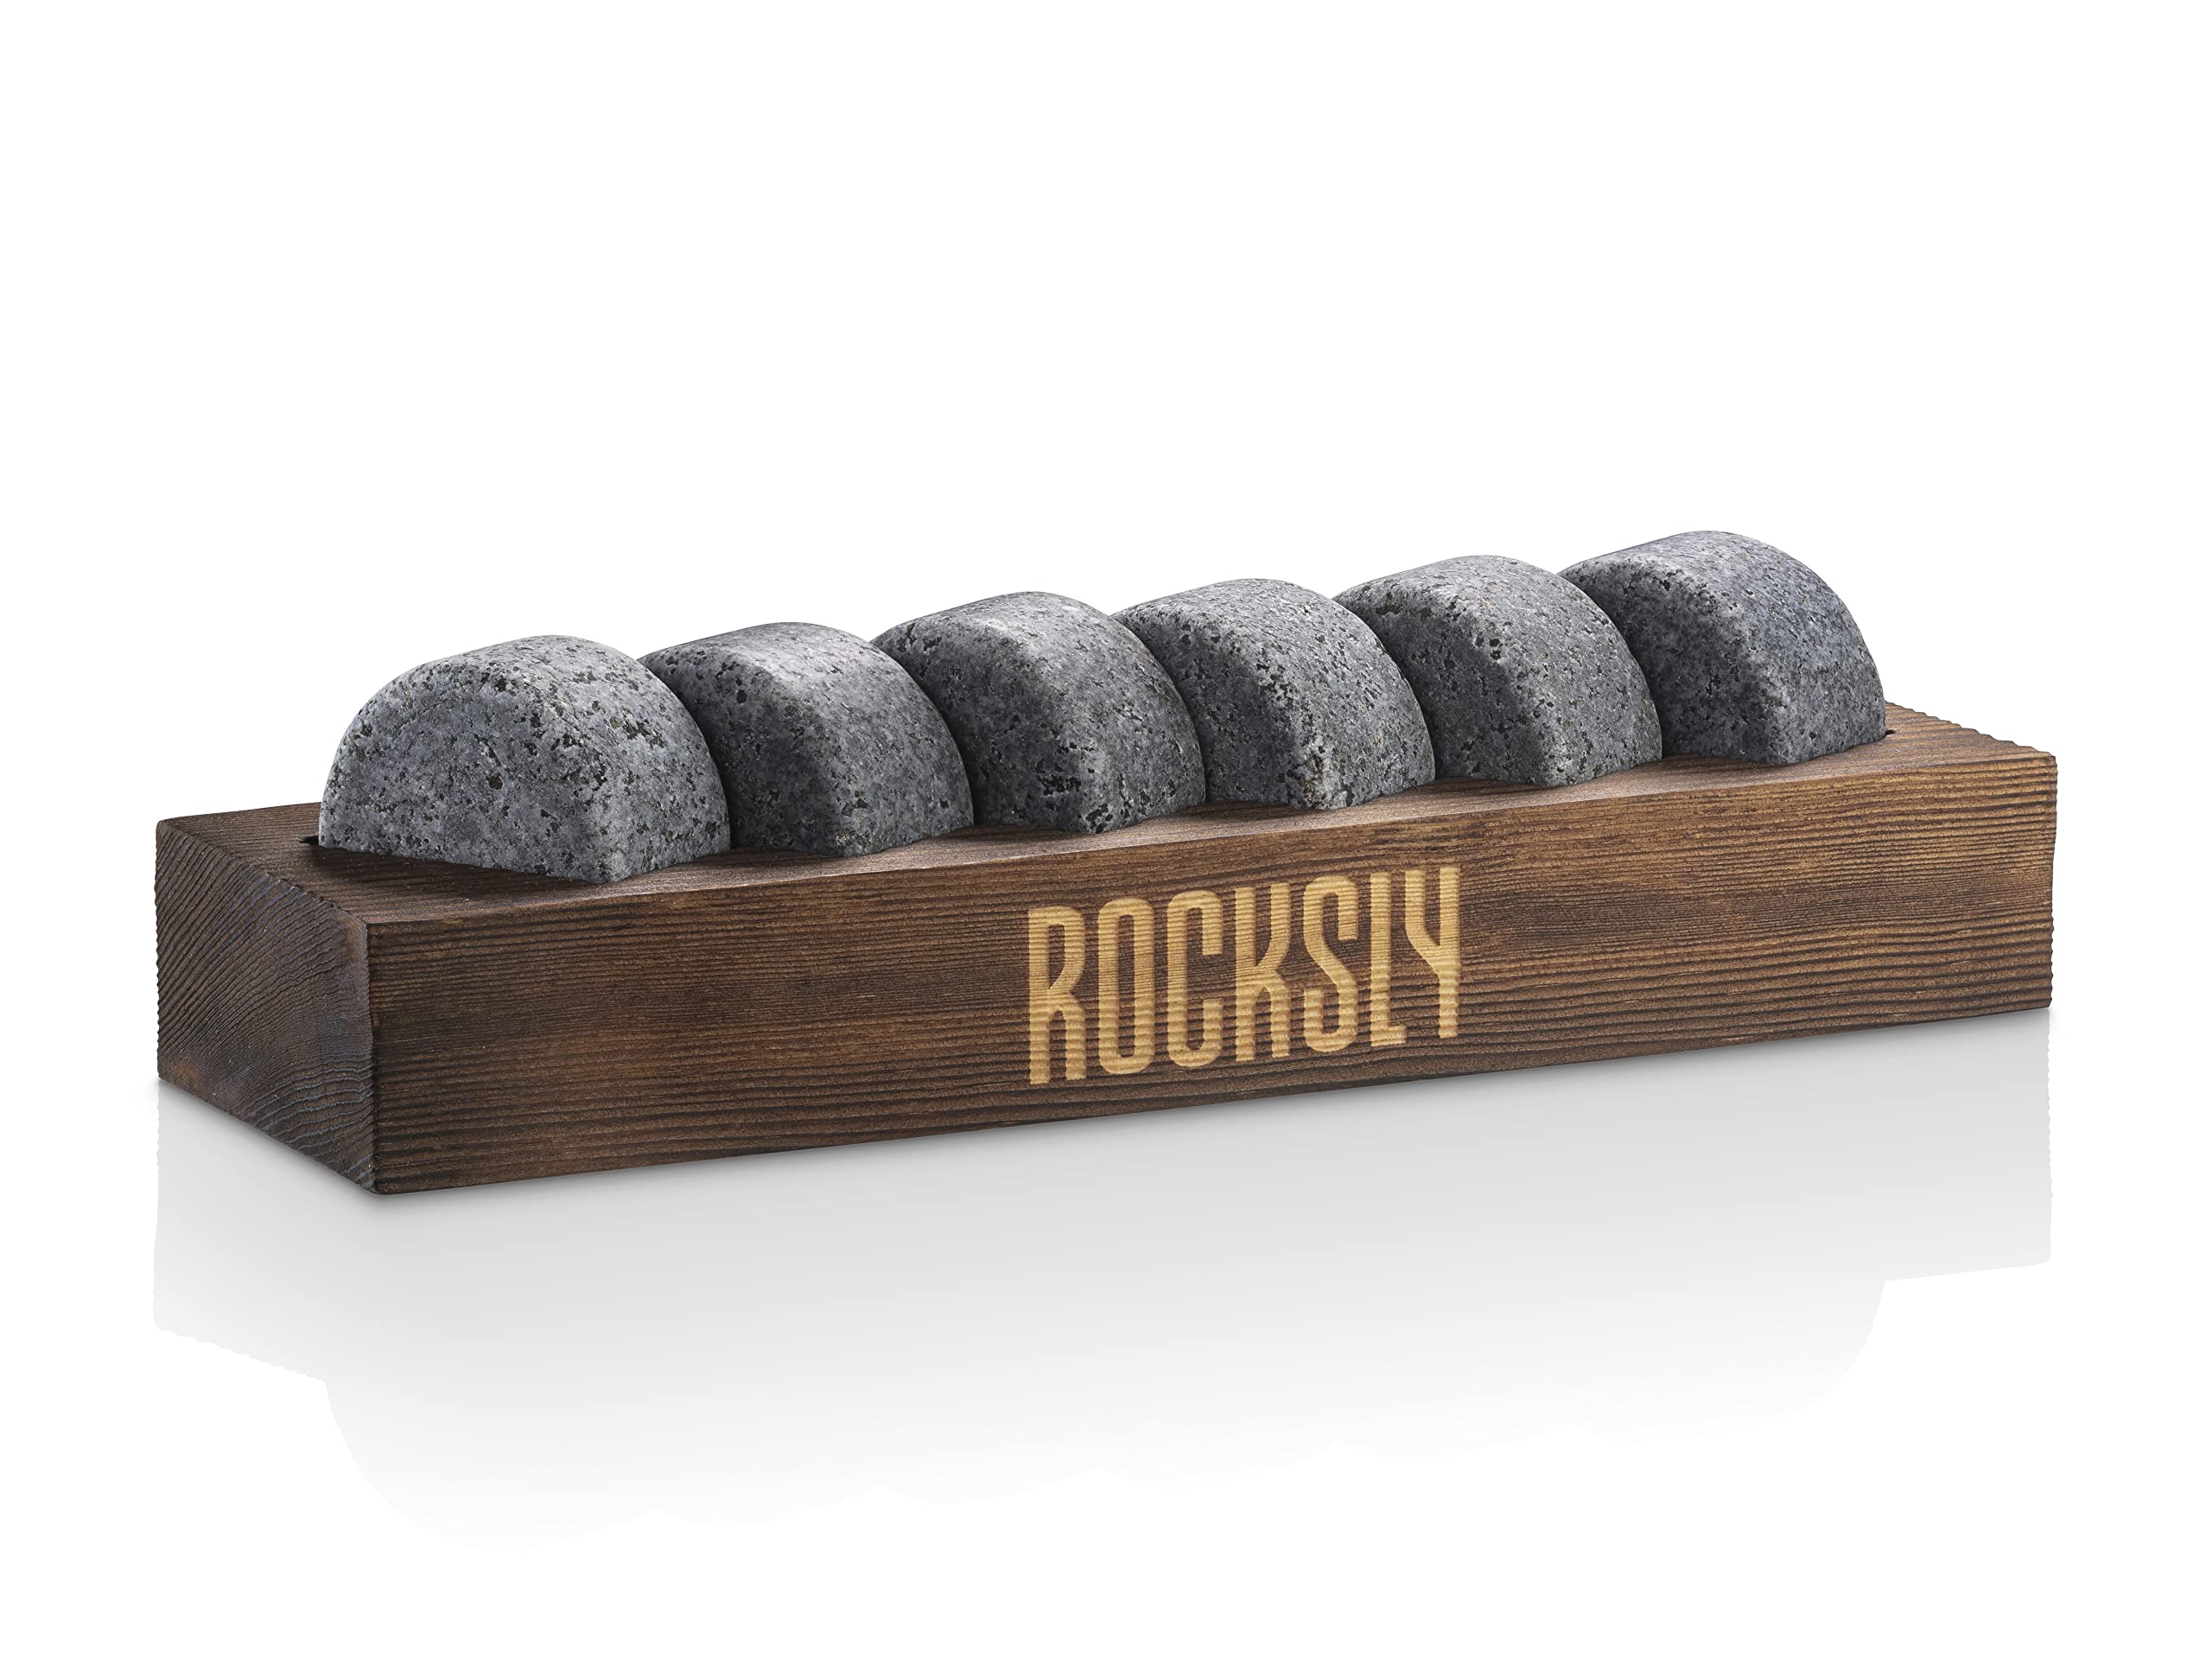 ROCKSLY Whiskey Stones Gift Set for Men | Whiskey Rocks Chilling Stones Set of 6 | Reusable Ice Cubes Chilling Rocks in a Wood Tray for Whiskey Lovers,Christmas, Men, Dad, Boyfriend